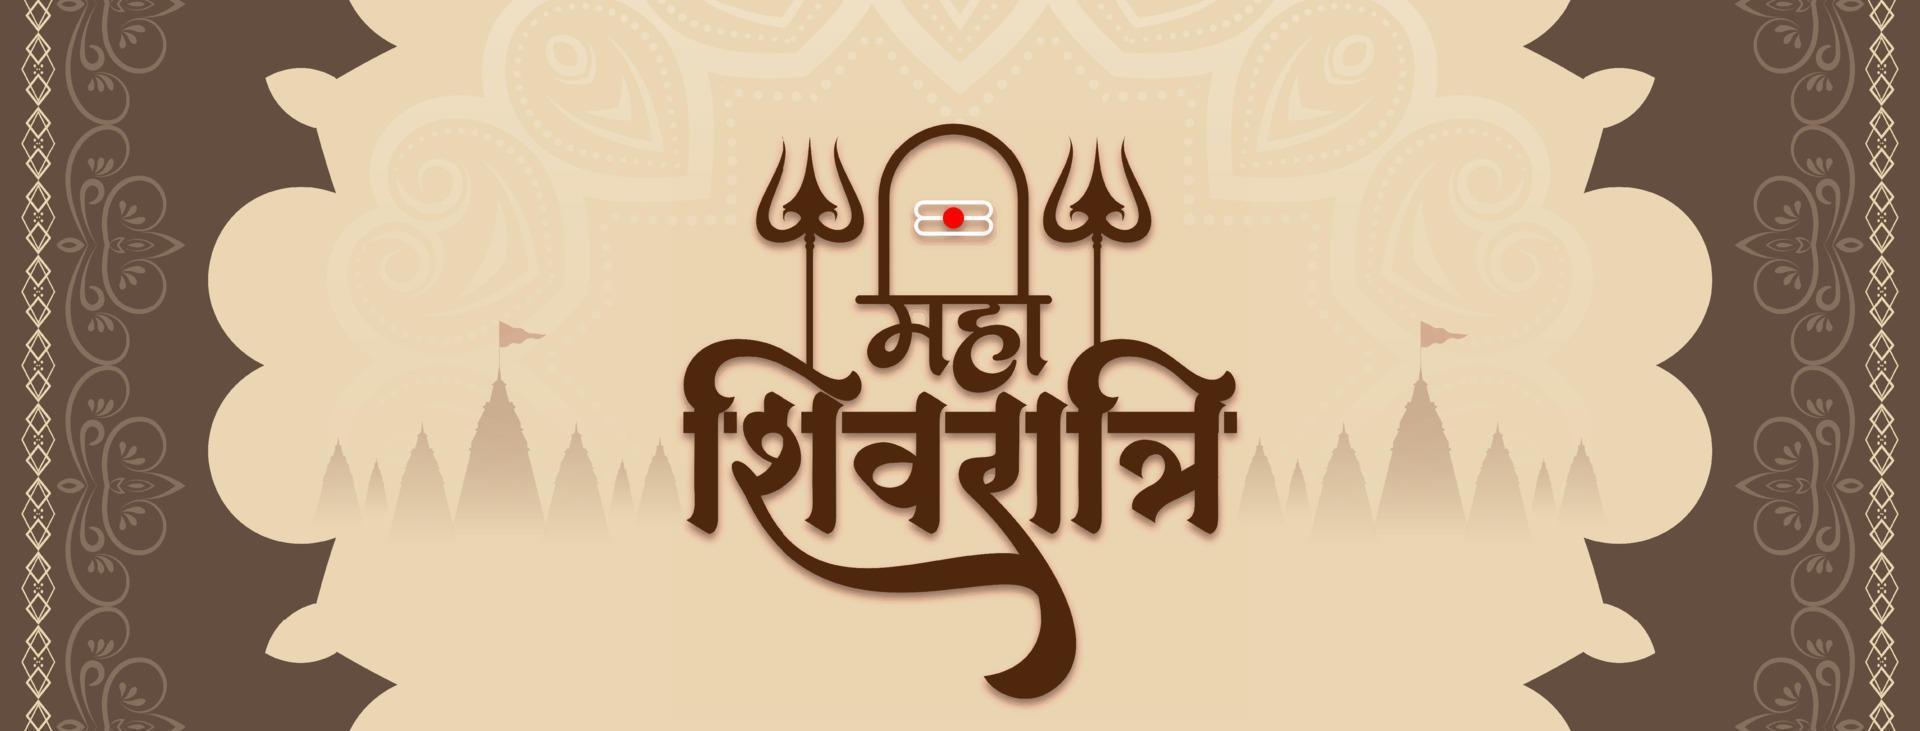 Happy Maha Shivratri Indian festival celebration banner design vector